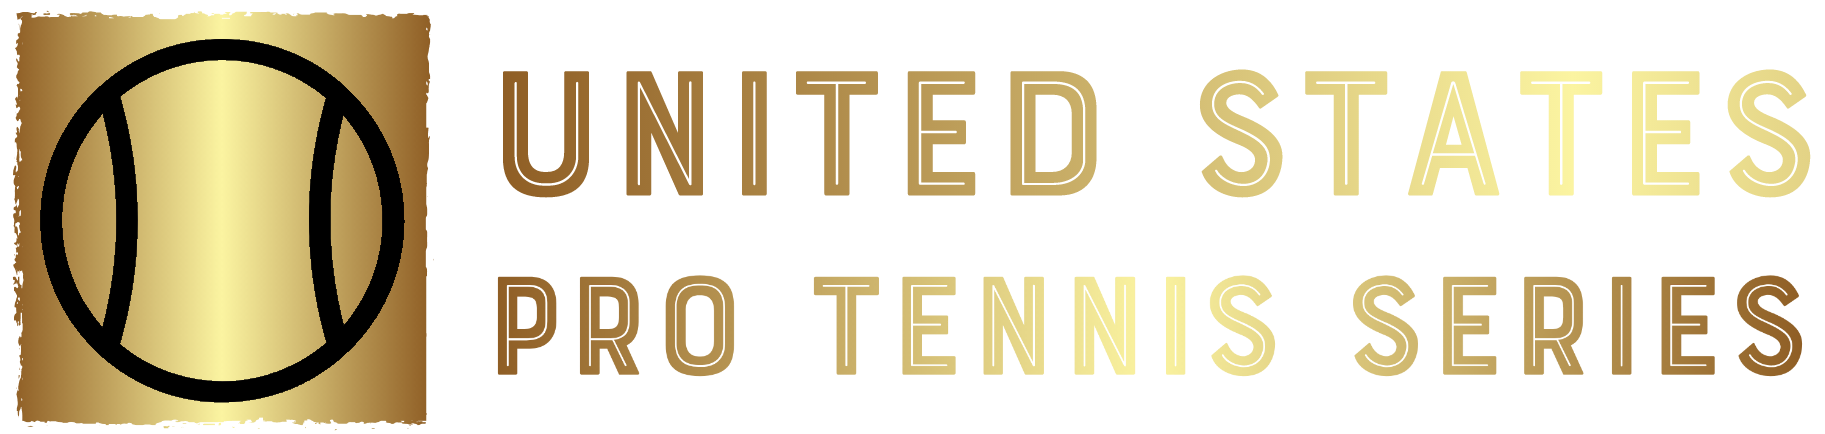 Watch UTR Pro Match Series Live — US Pro Tennis Series